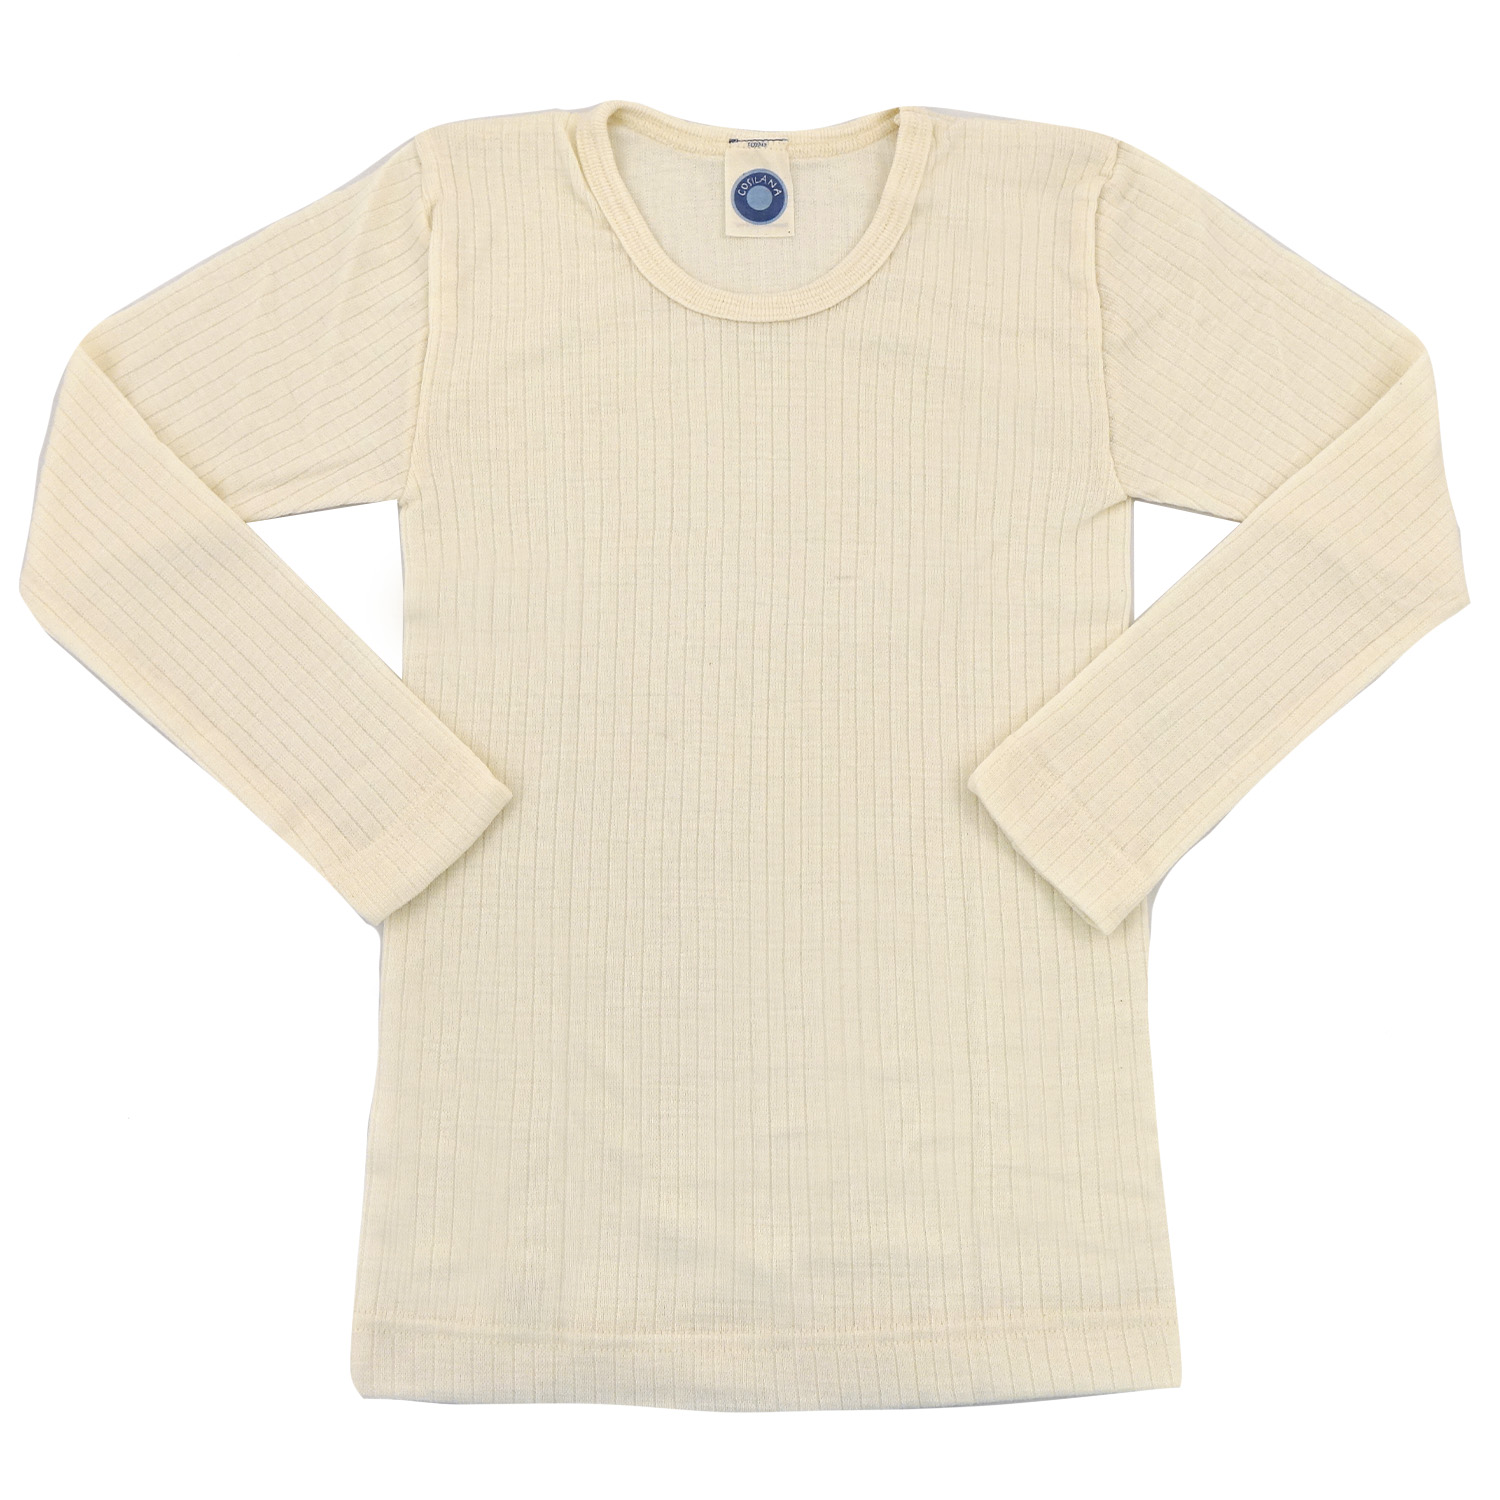 Cosilana Kinder-Unterhemd (Langarm) aus Baumwolle/Wolle/Seide